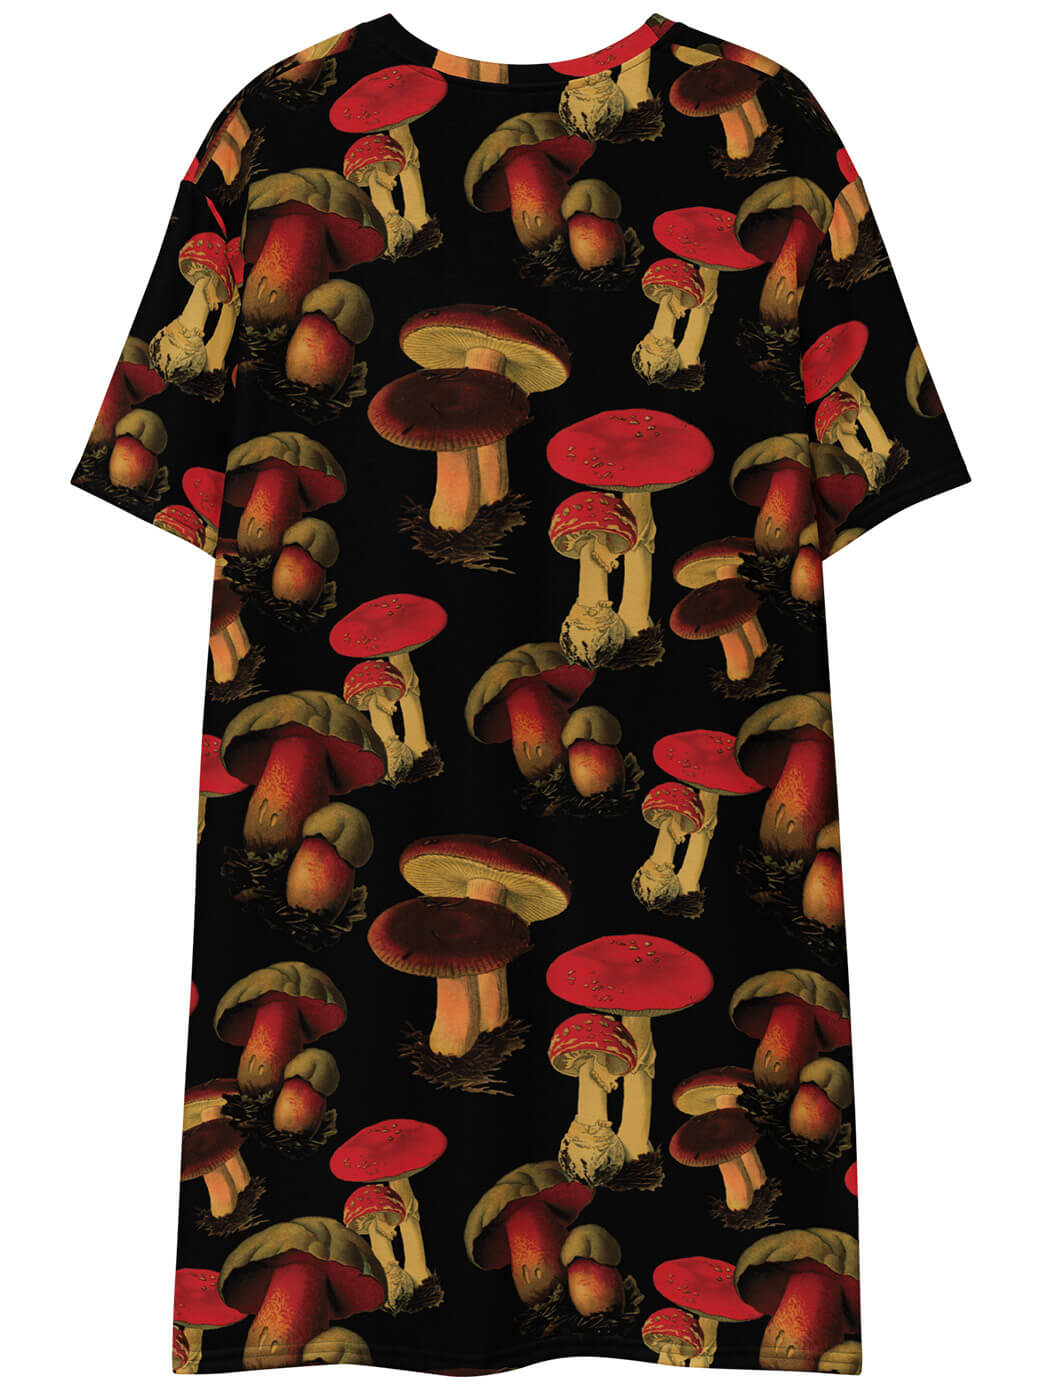 Plus size mushroom dress.